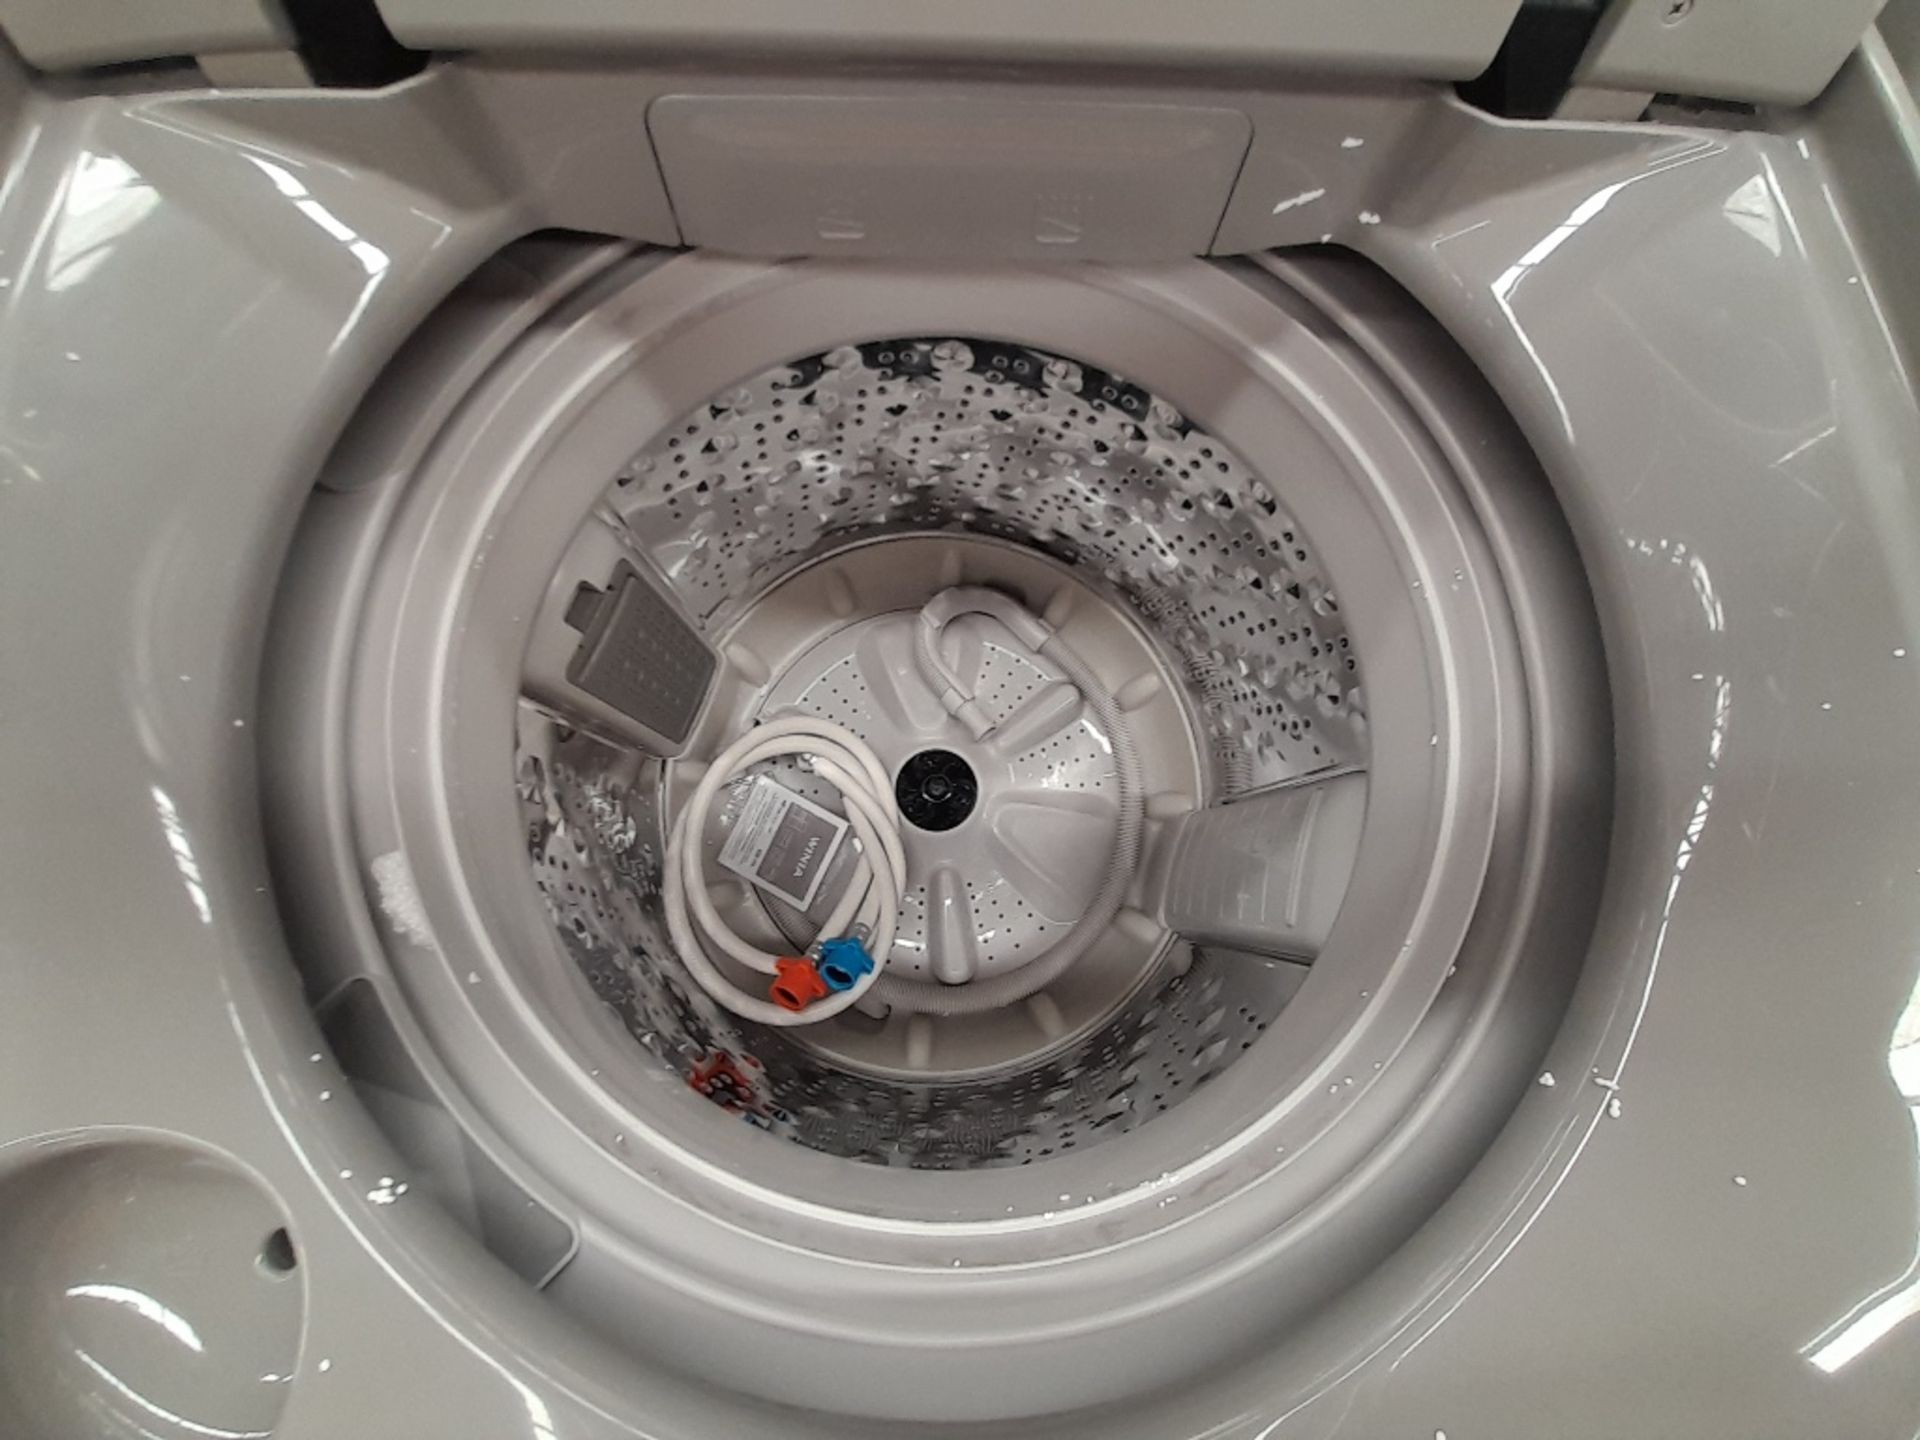 Lote de 2 lavadoras contiene: 1 lavadora de 19 KG Marca WINIA, Modelo DG1B386CWW1, Serie ND, Color - Image 4 of 6